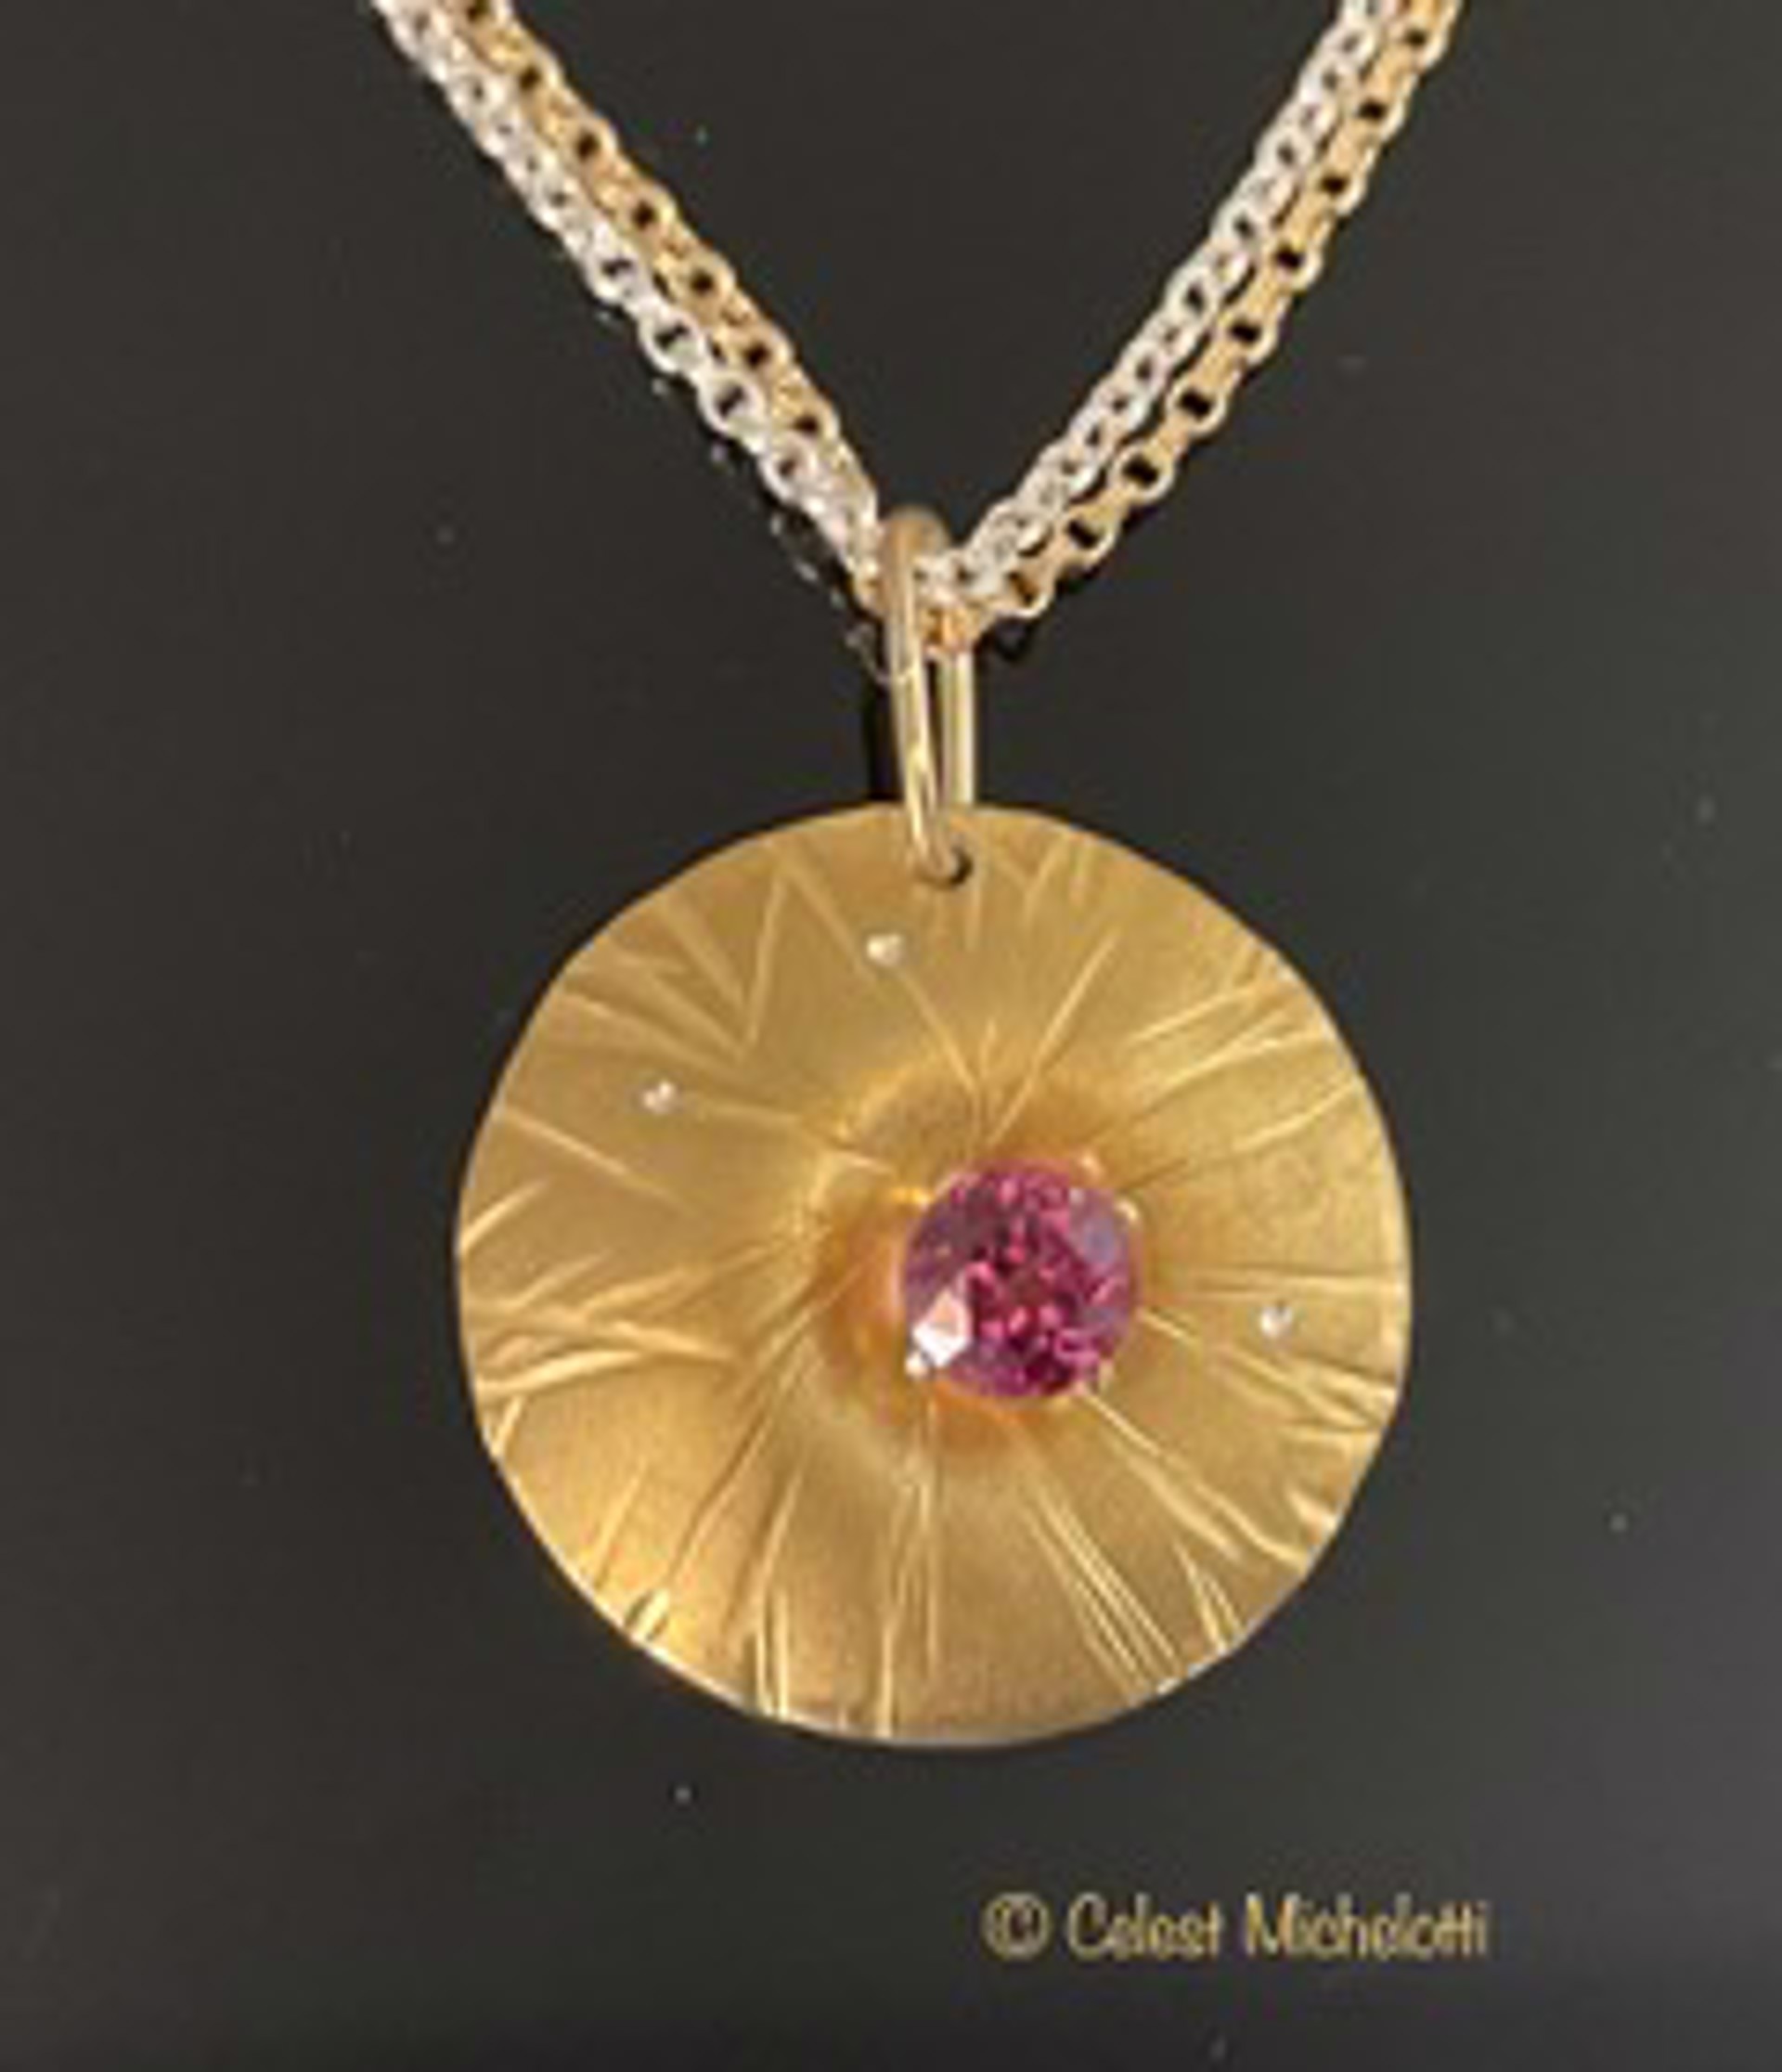 Nova 1" necklace, 18-21" chain with rhodolites by Celest Michelotti